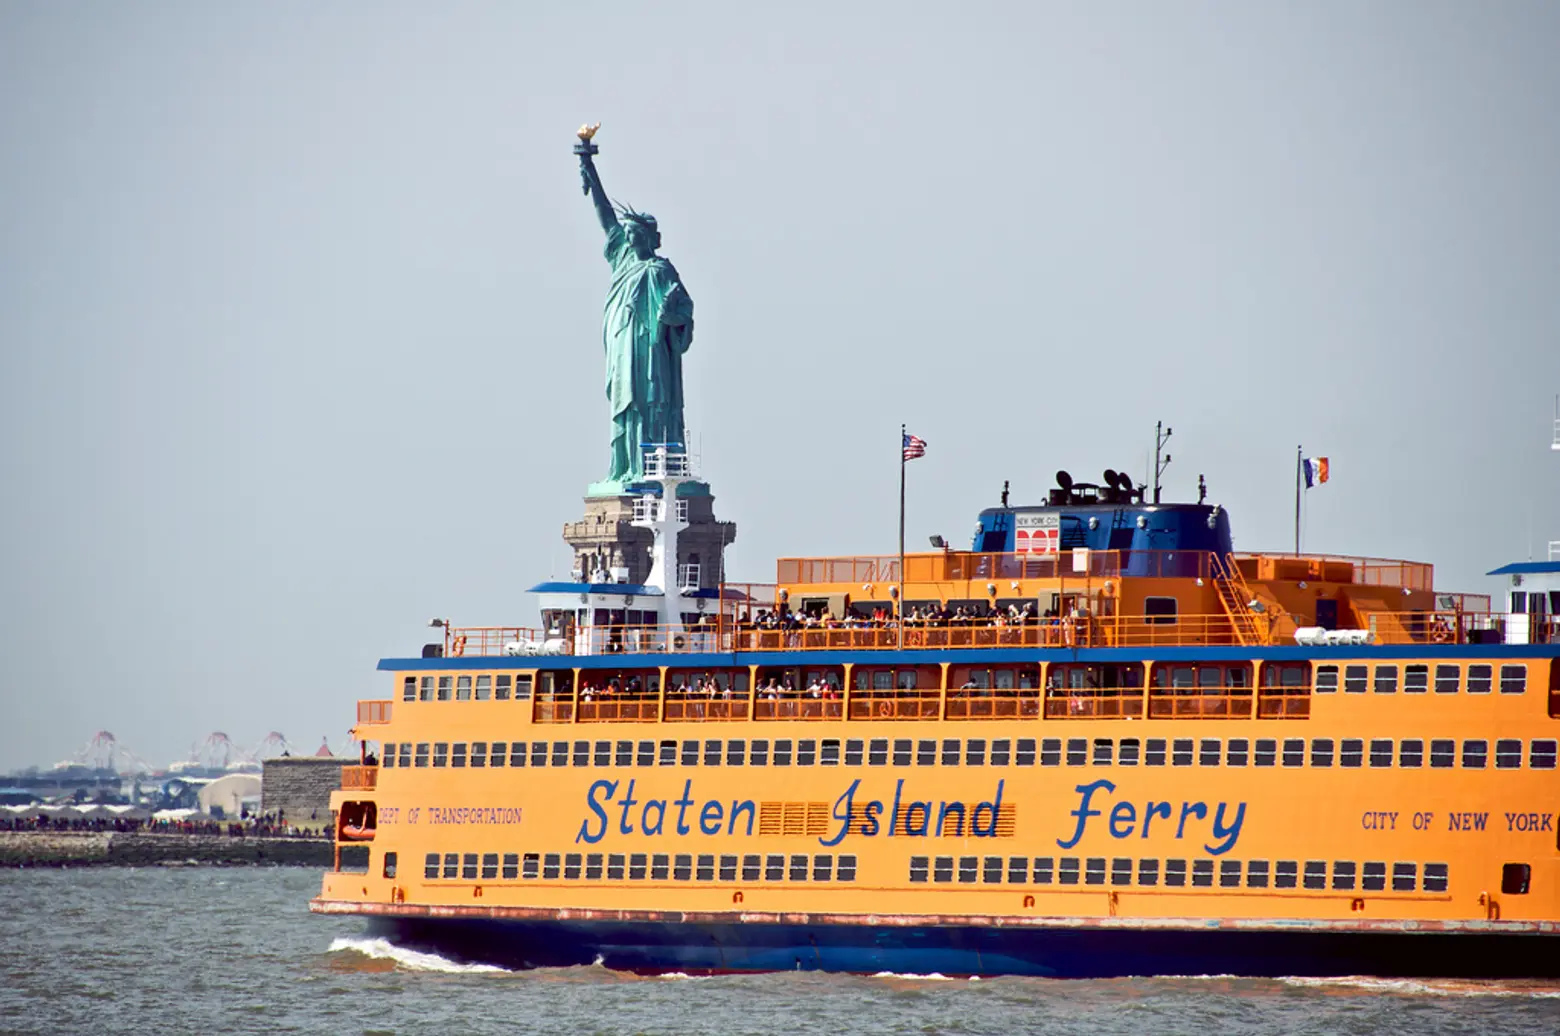 staten island ferry, romantic nyc spots, nyc ferry